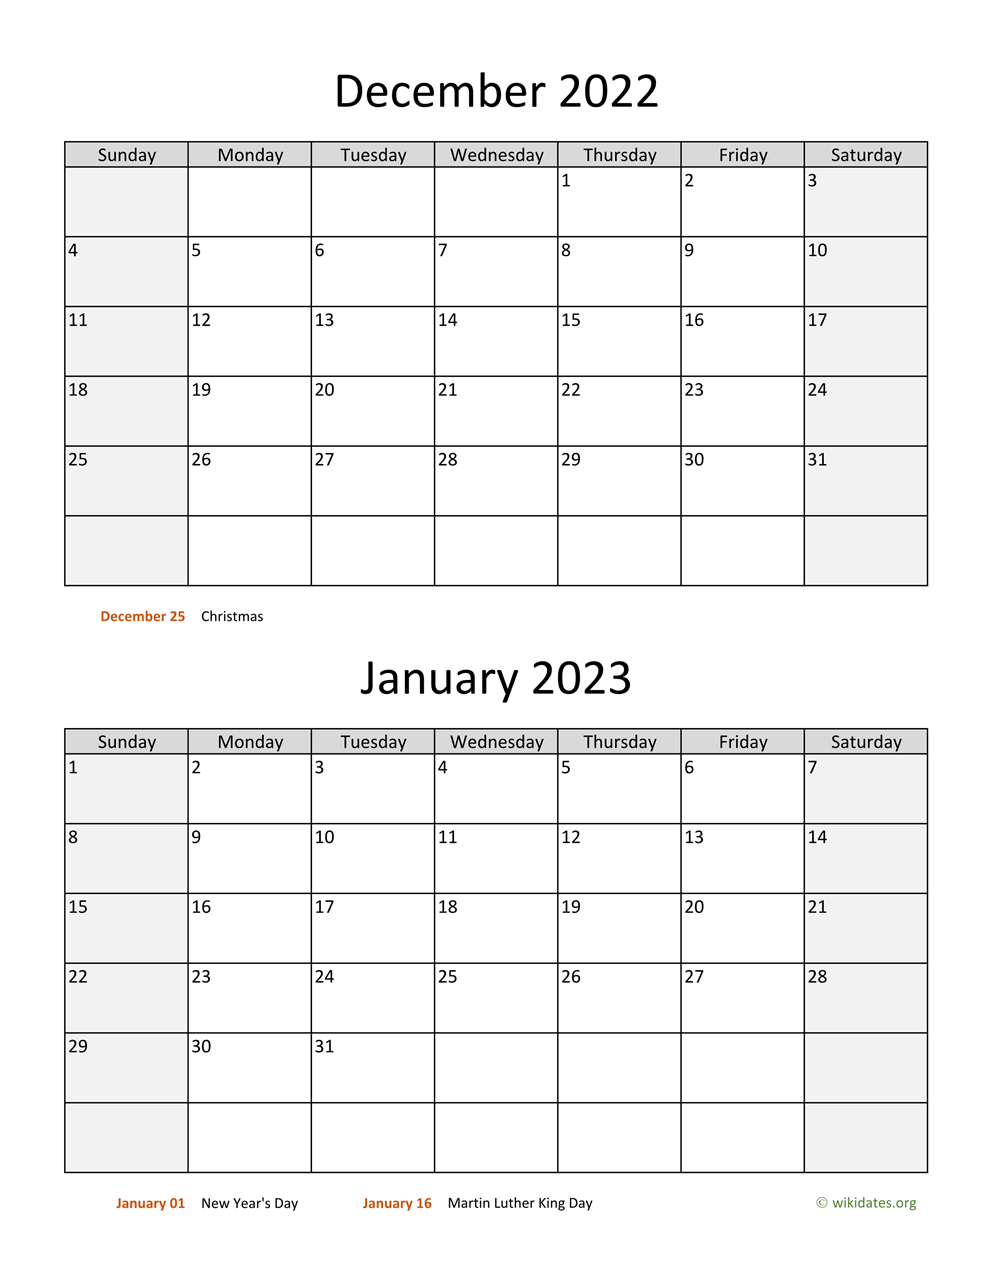 December 2022 And January 2023 Calendar December 2022 And January 2023 Calendar | Wikidates.org